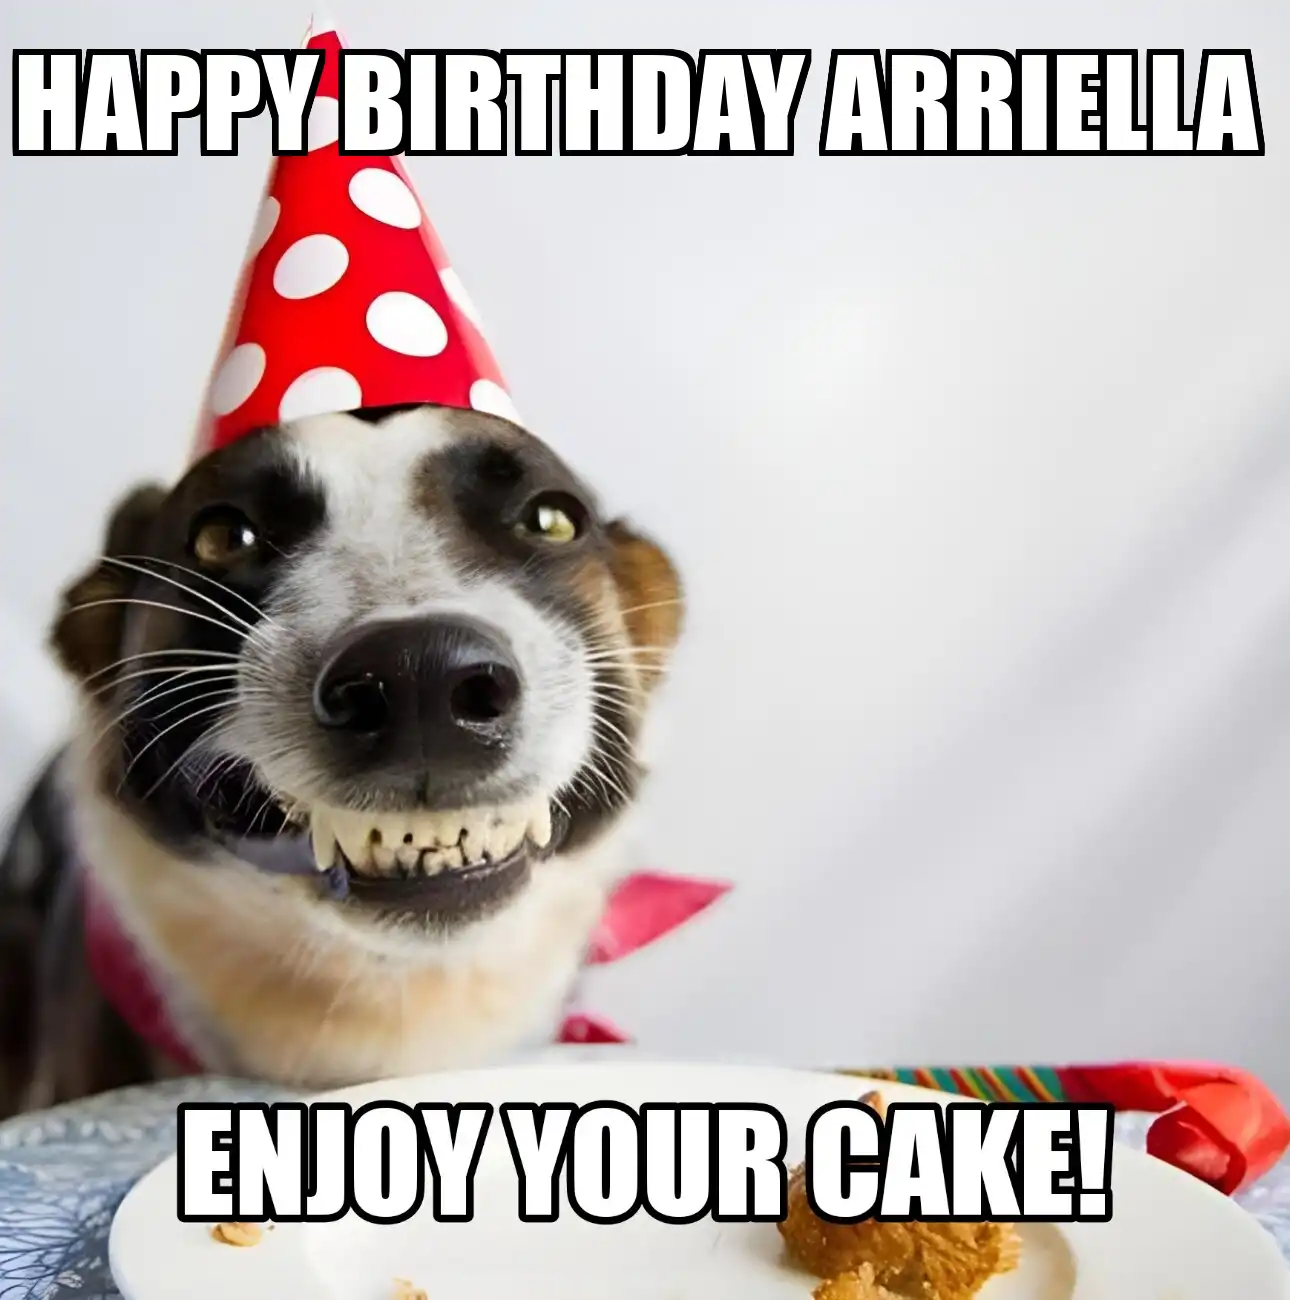 Happy Birthday Arriella Enjoy Your Cake Dog Meme